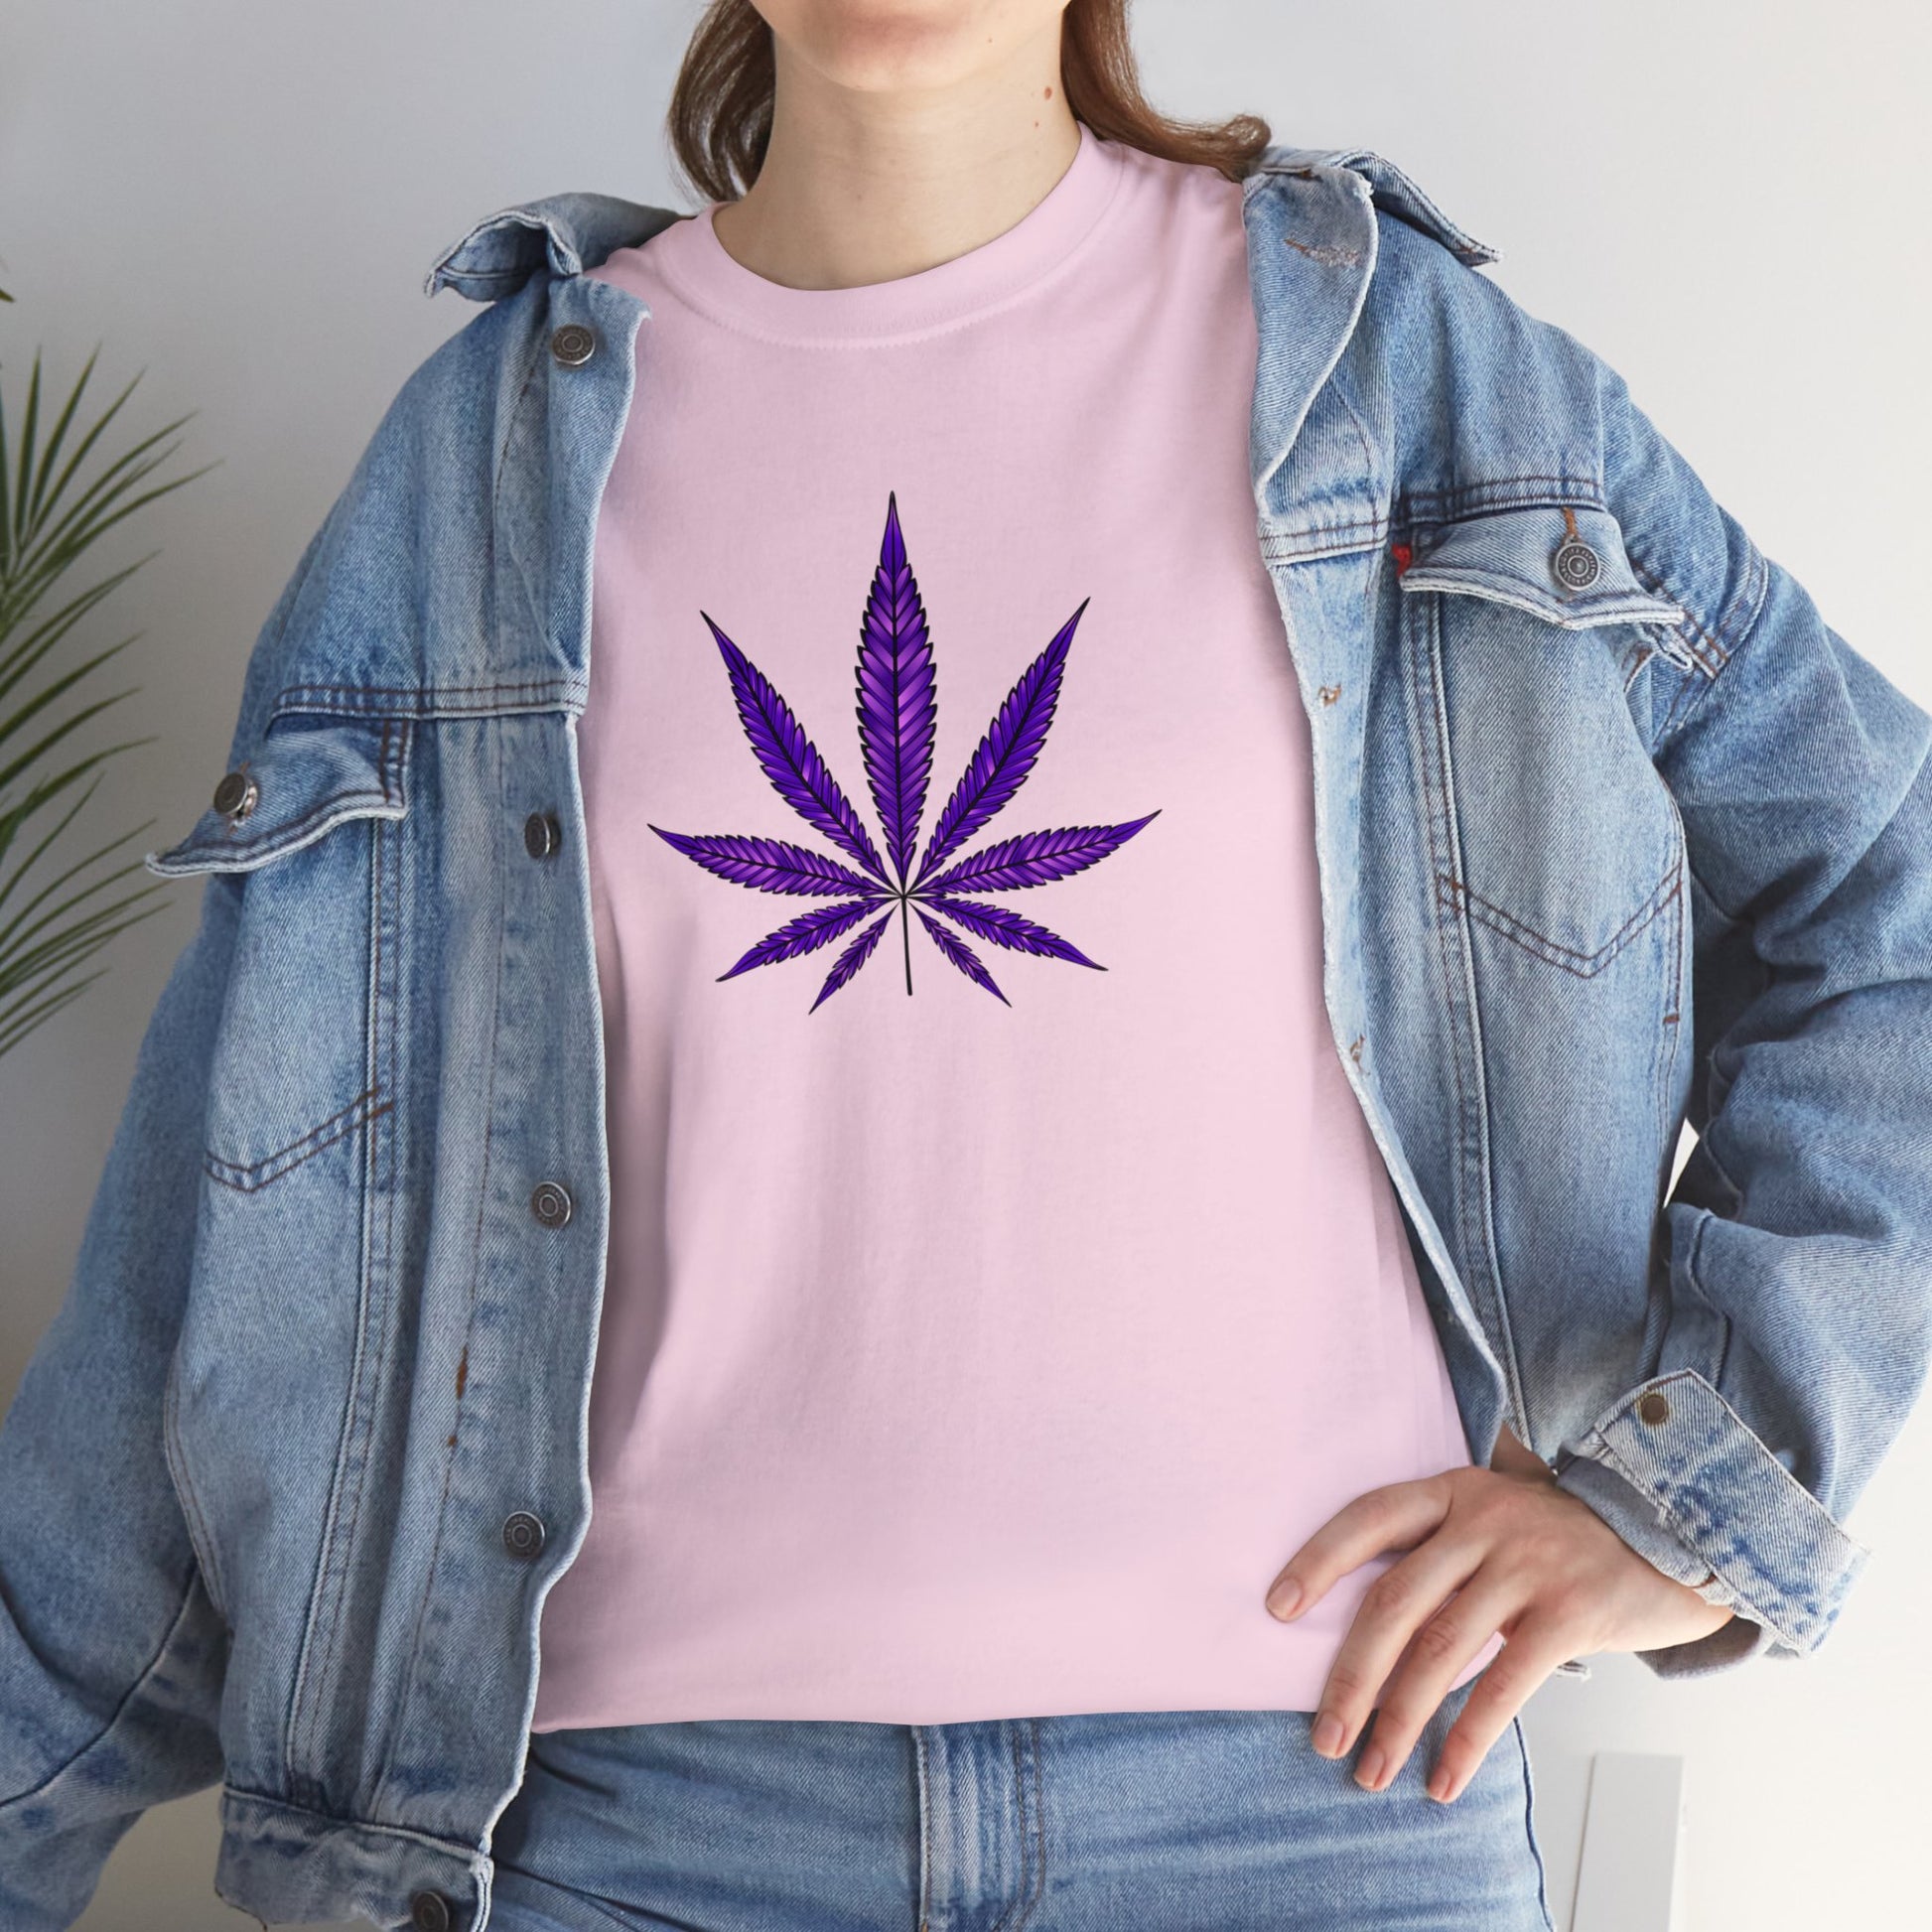 A person wearing a vibrant Purple Cannabis Leaf Tee, layered under a blue denim jacket, symbolizing marijuana culture.